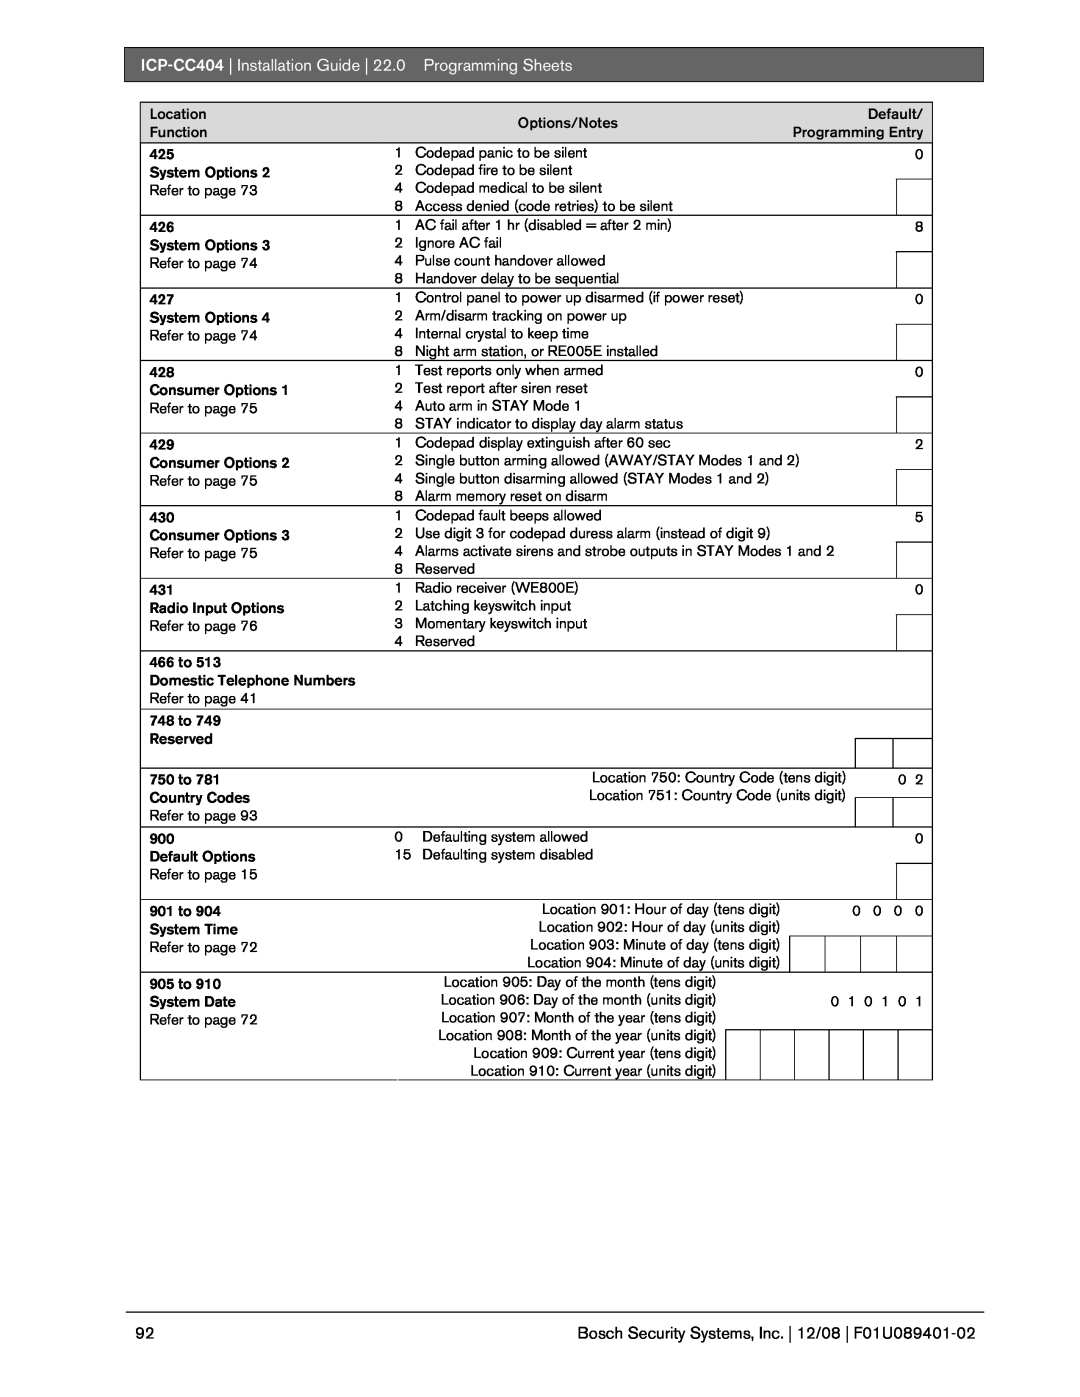 Bosch Appliances manual 22.0, Programming Sheets, ICP-CC404| Installation Guide, Location 